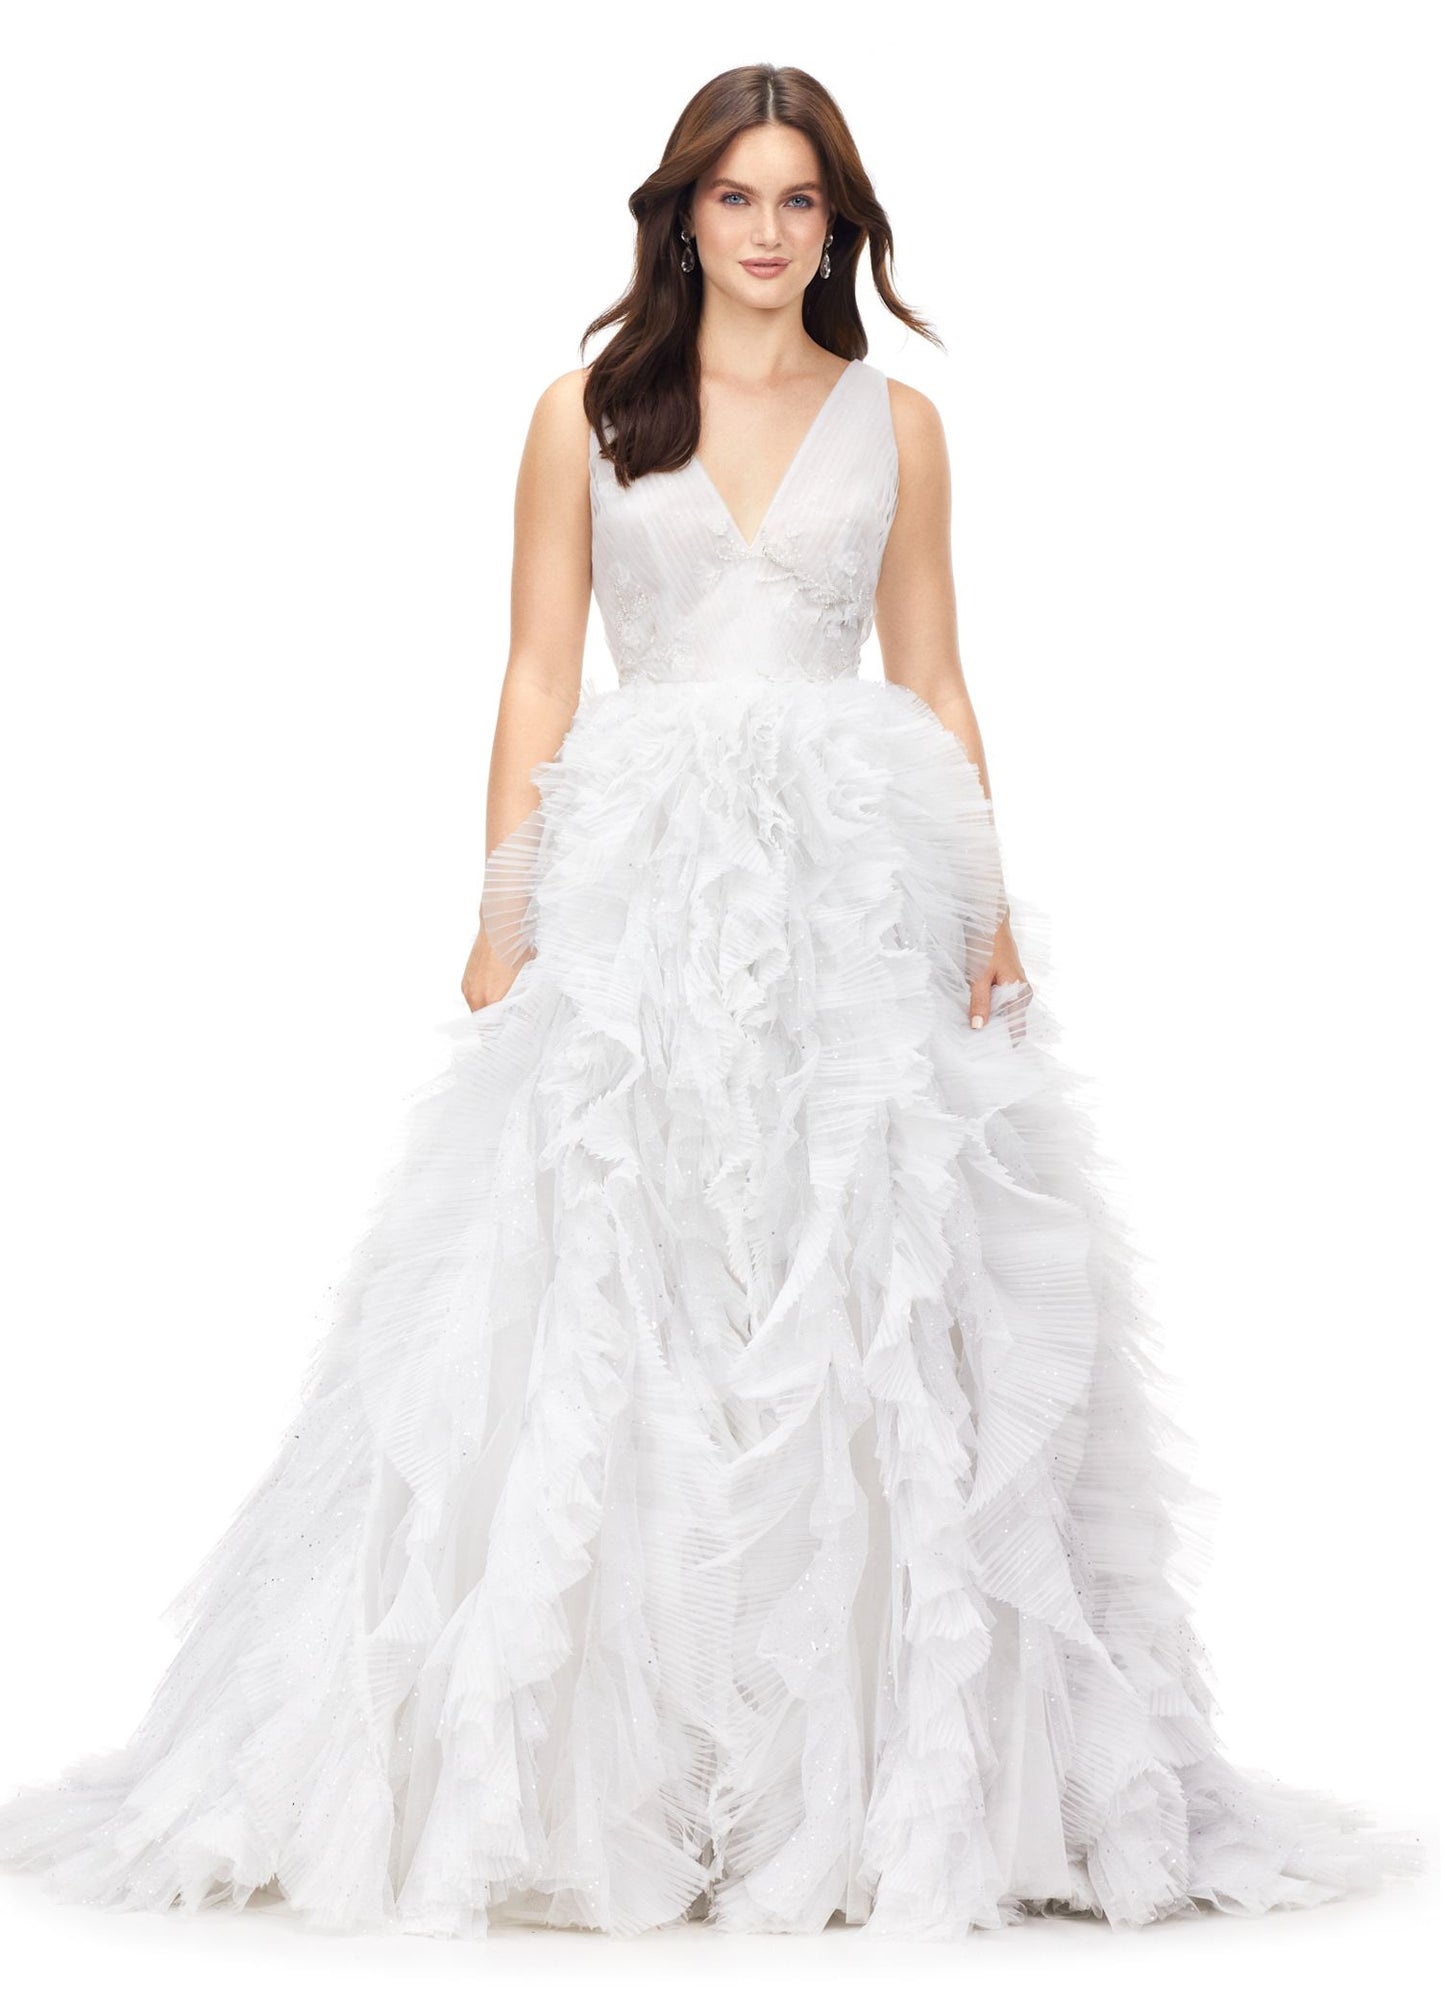 Ashley Lauren 11233 Tulle V-Neck Prom Dress Ball Gown with Ruffle Skirt